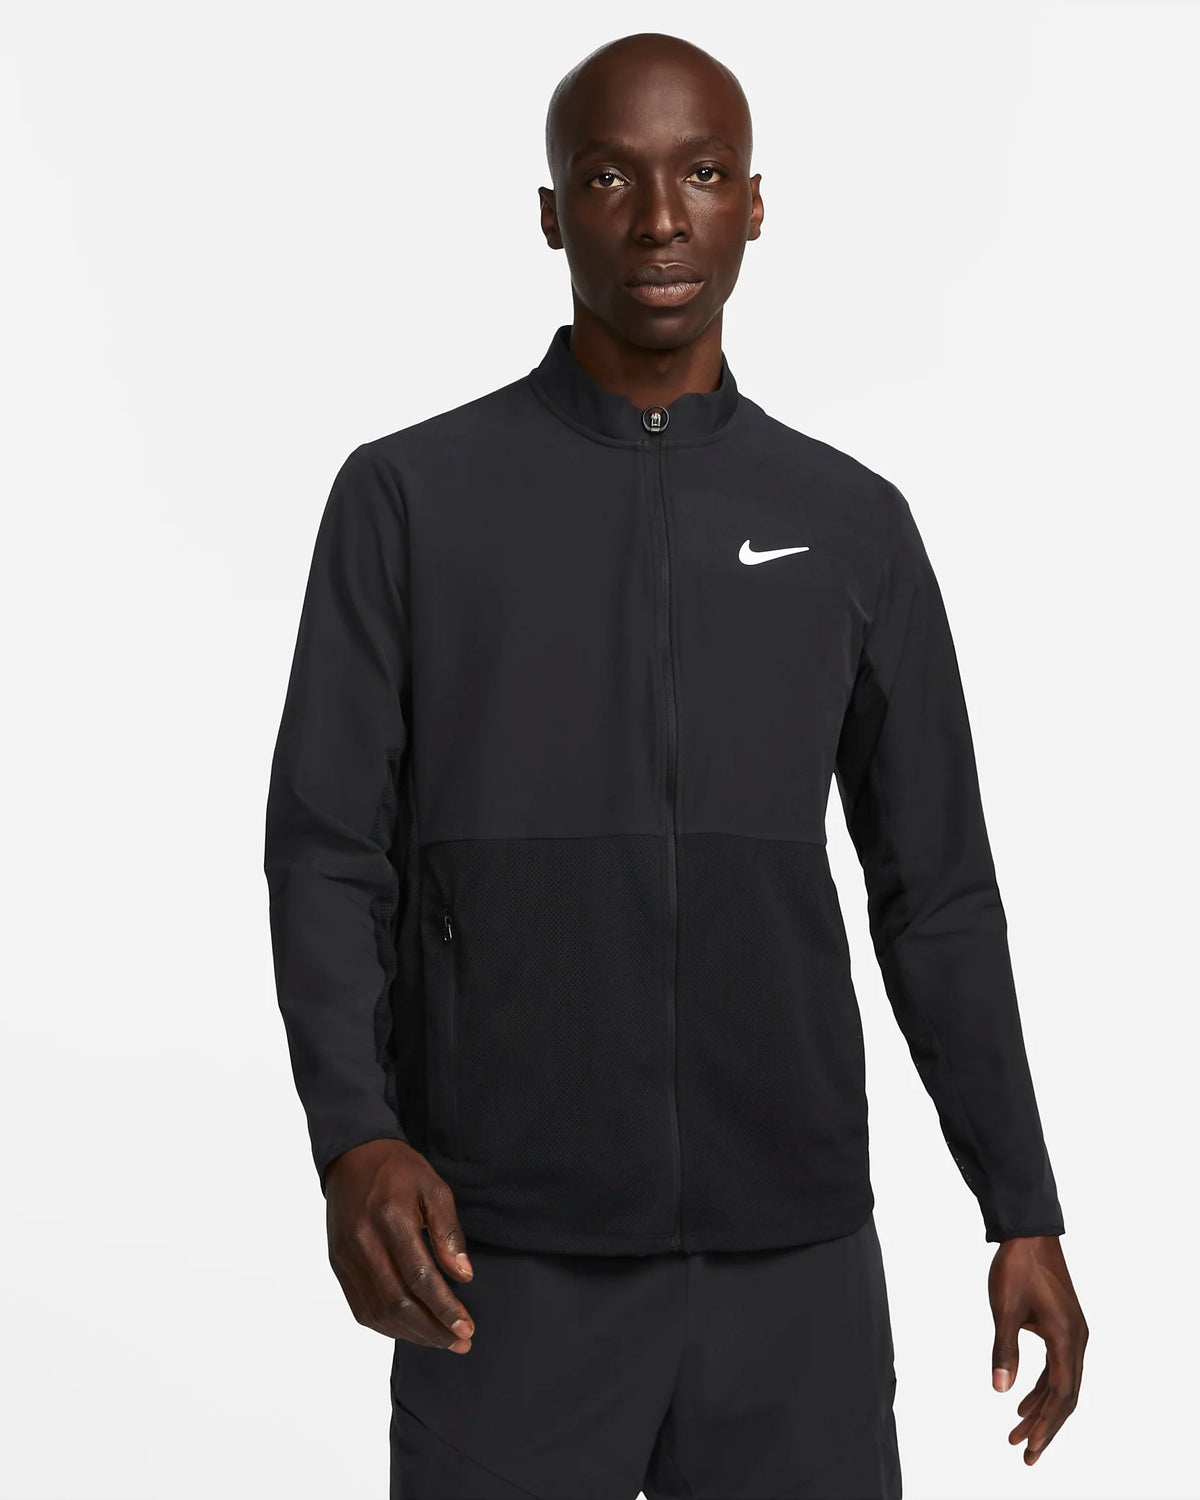 Men's Nike Court Advantage Jacket